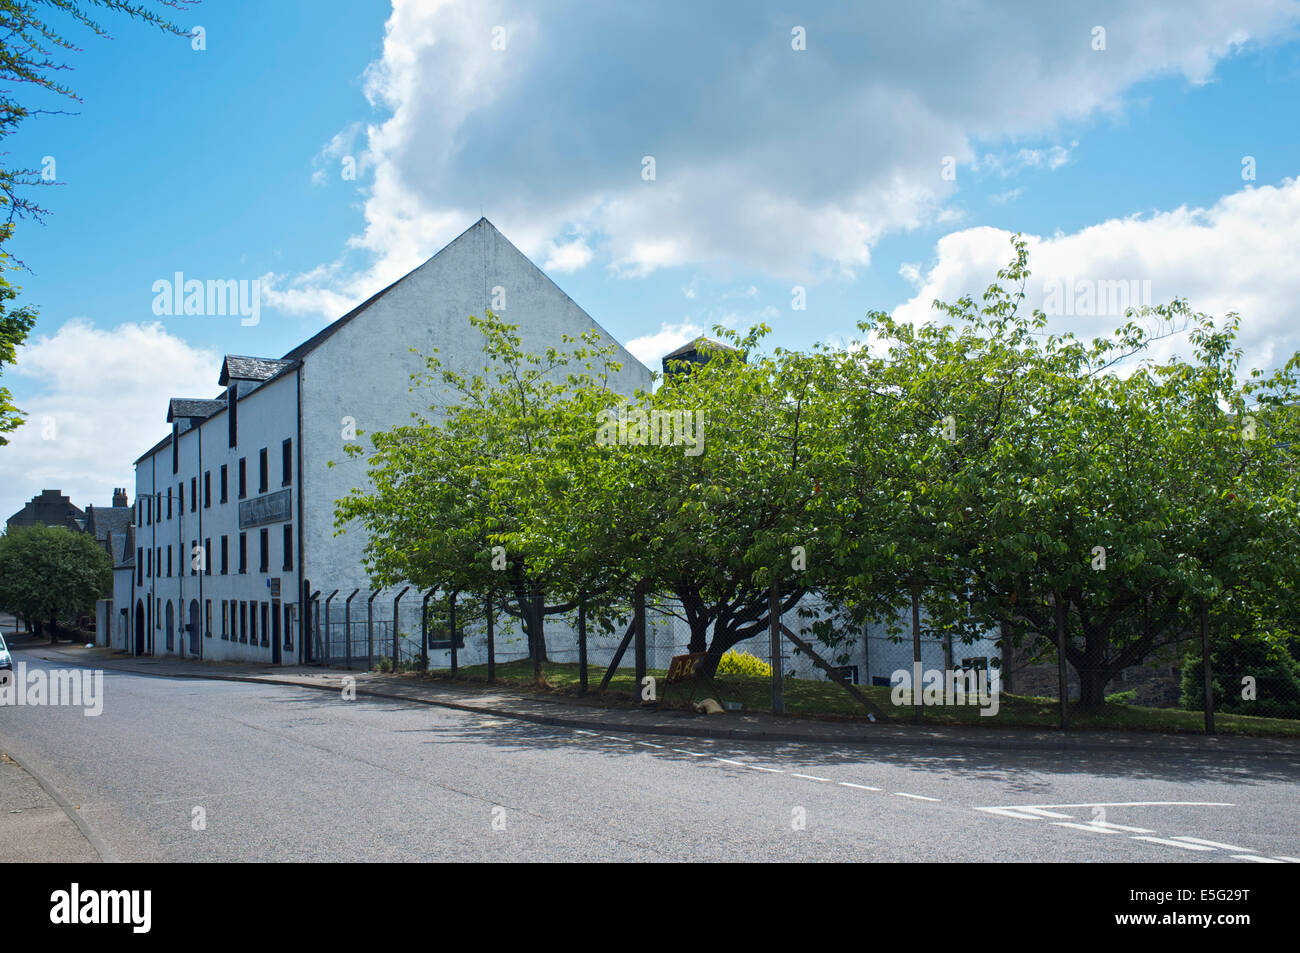 Glen Scotia distillery Stock Photo